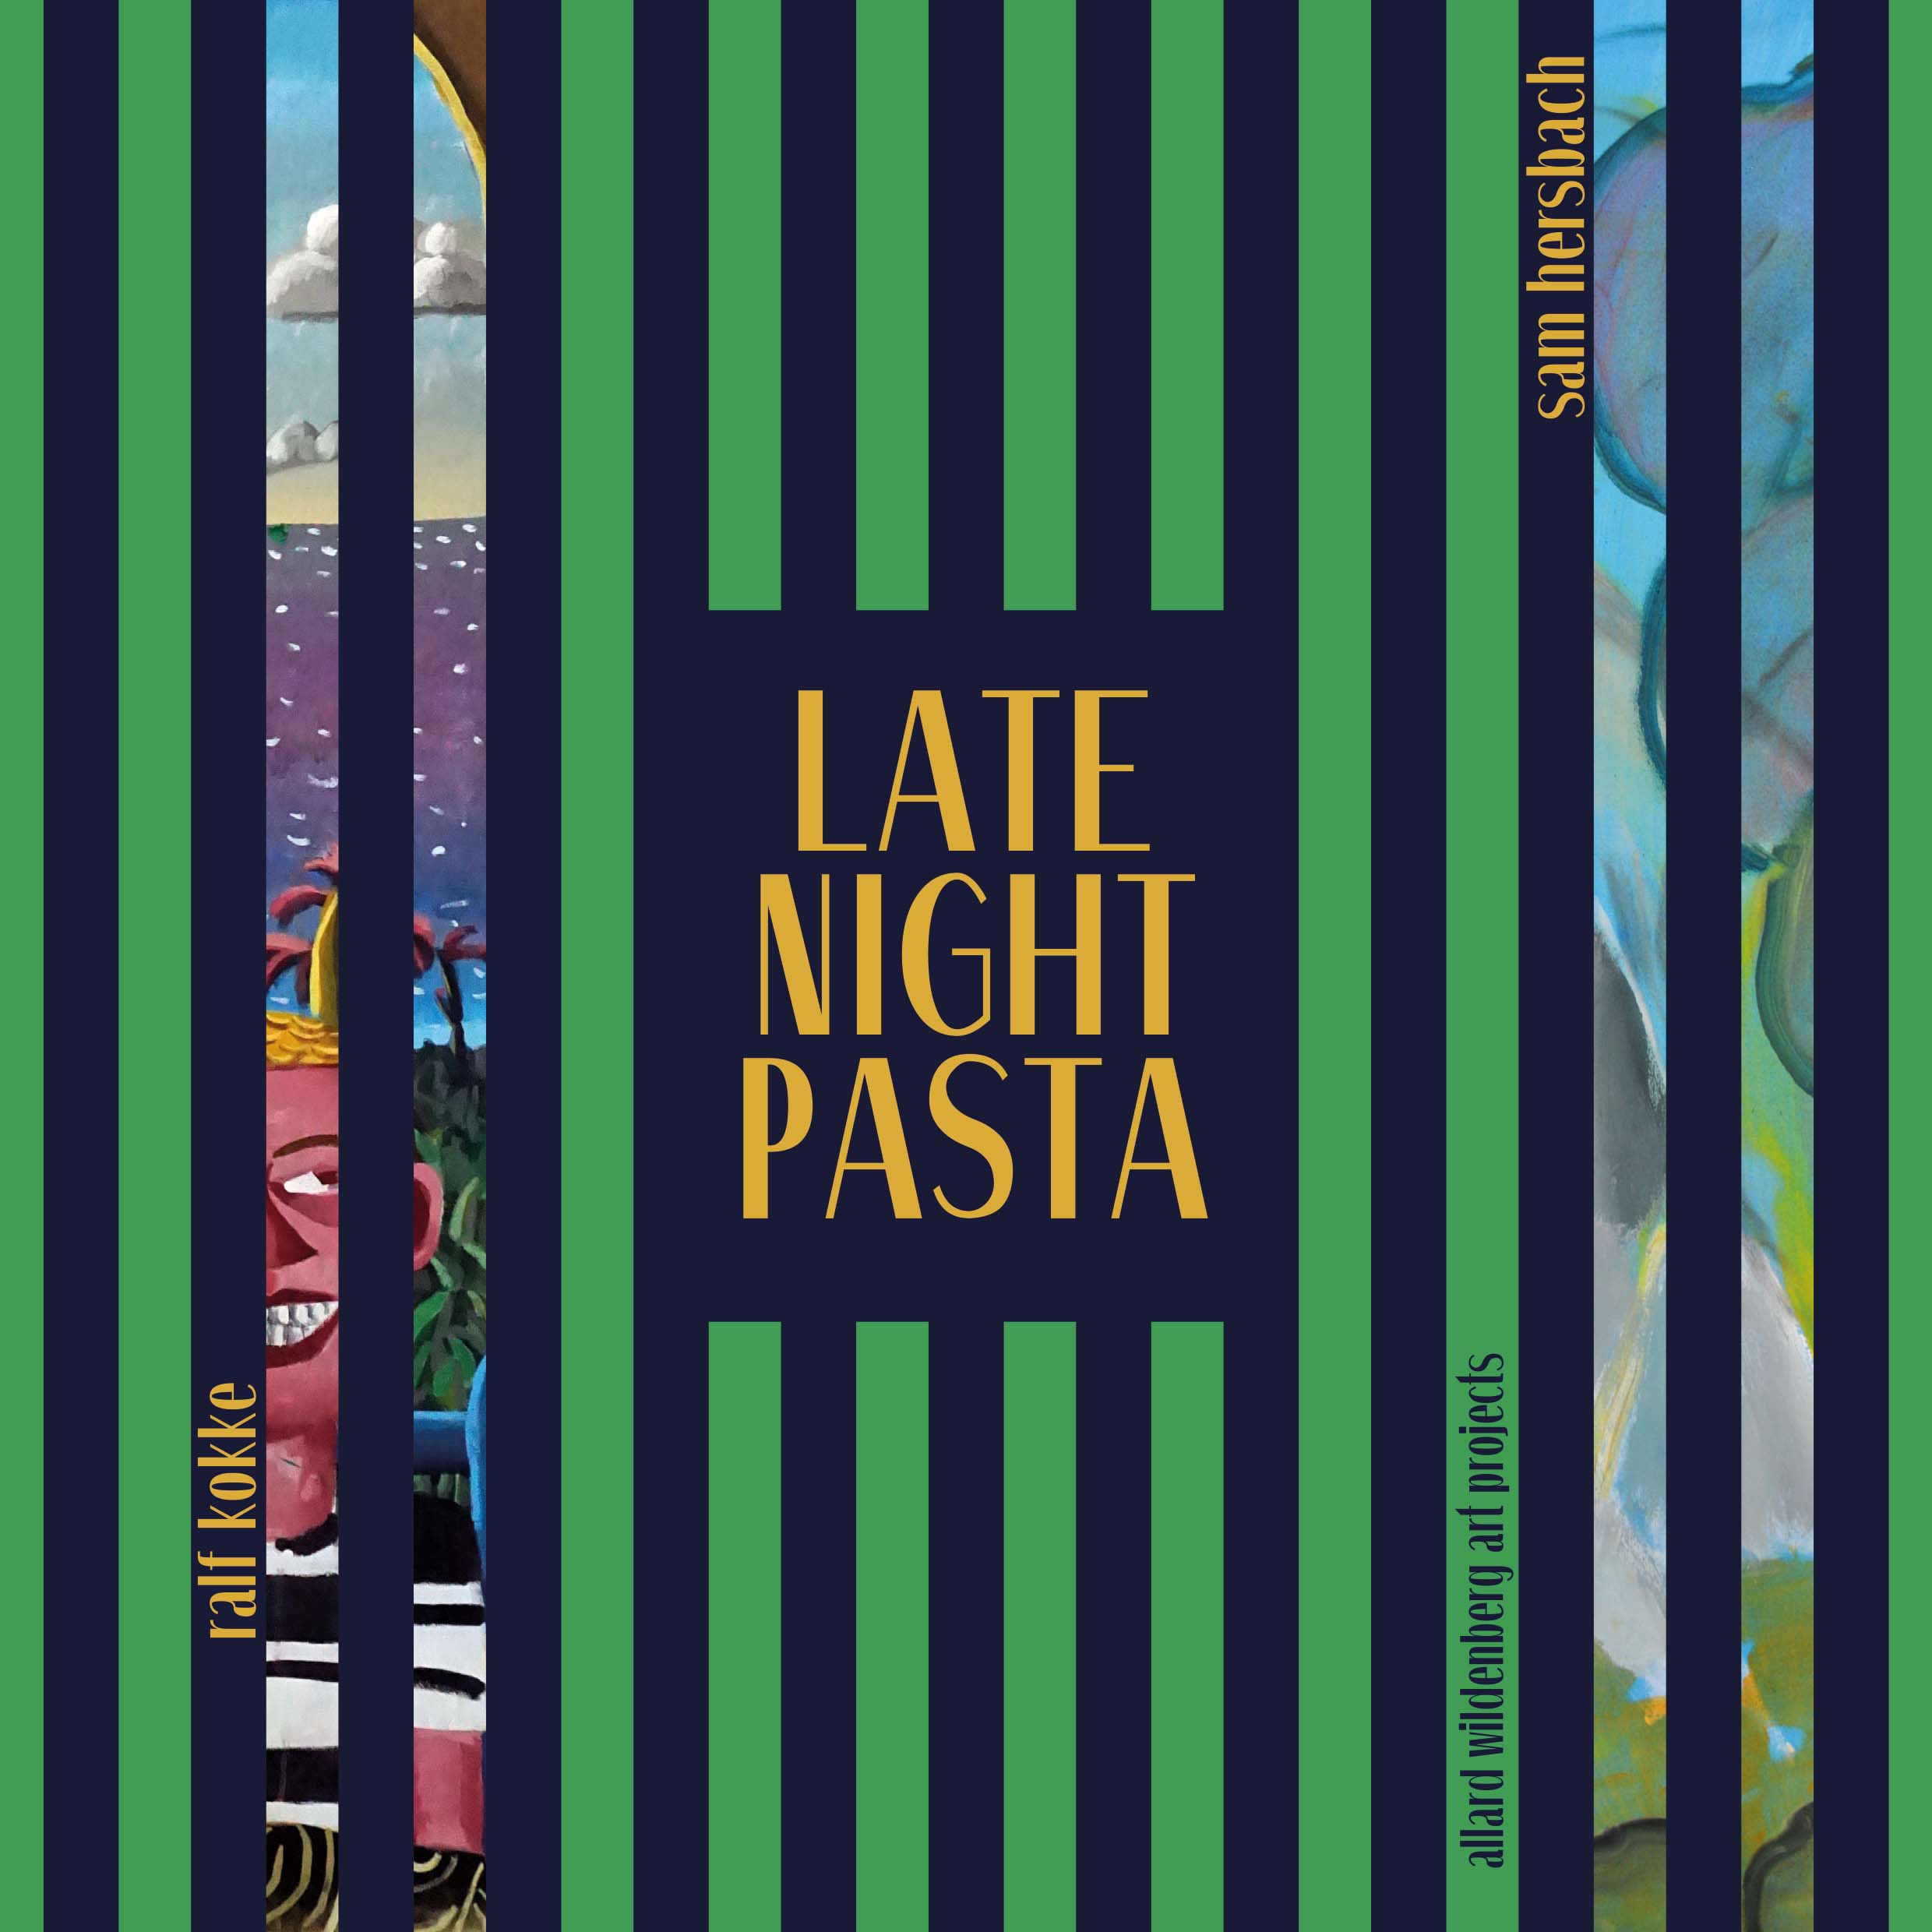 Ralf Kokke - Sam Hersbach - Late Night Pasta - Catalog Allard Wildenberg Art Projects